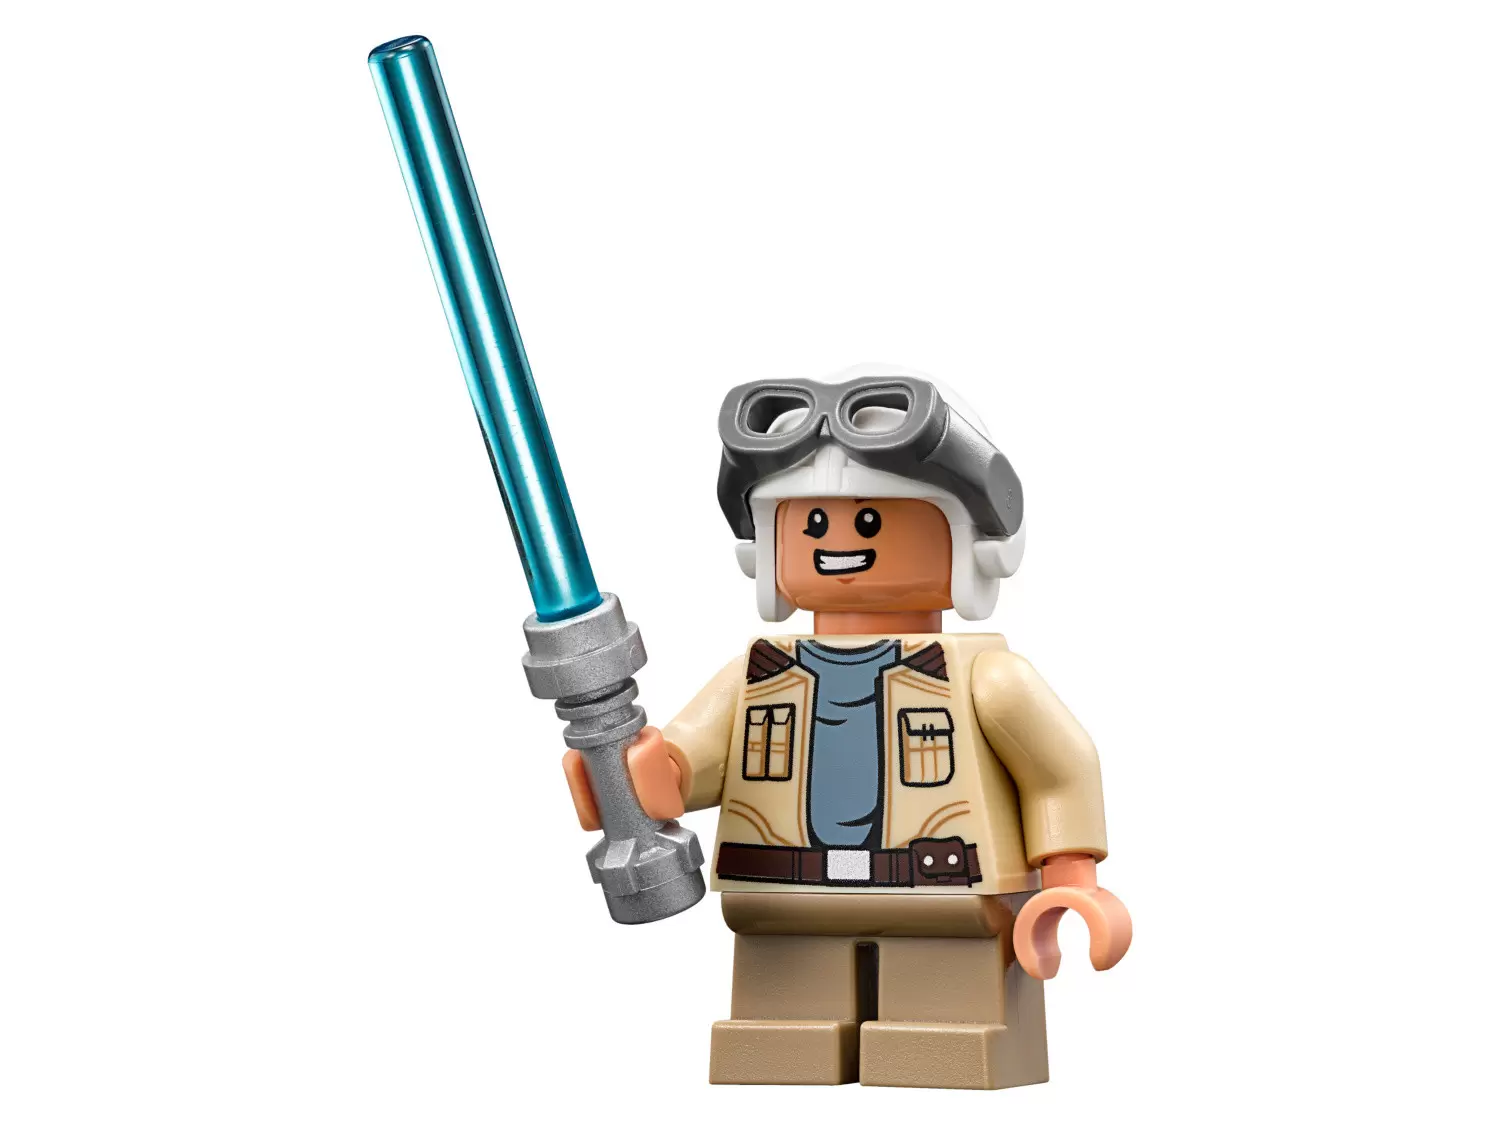 Freemaker Minifigure Figurine New Lego Star Wars Rowan sw0851 From 75185 